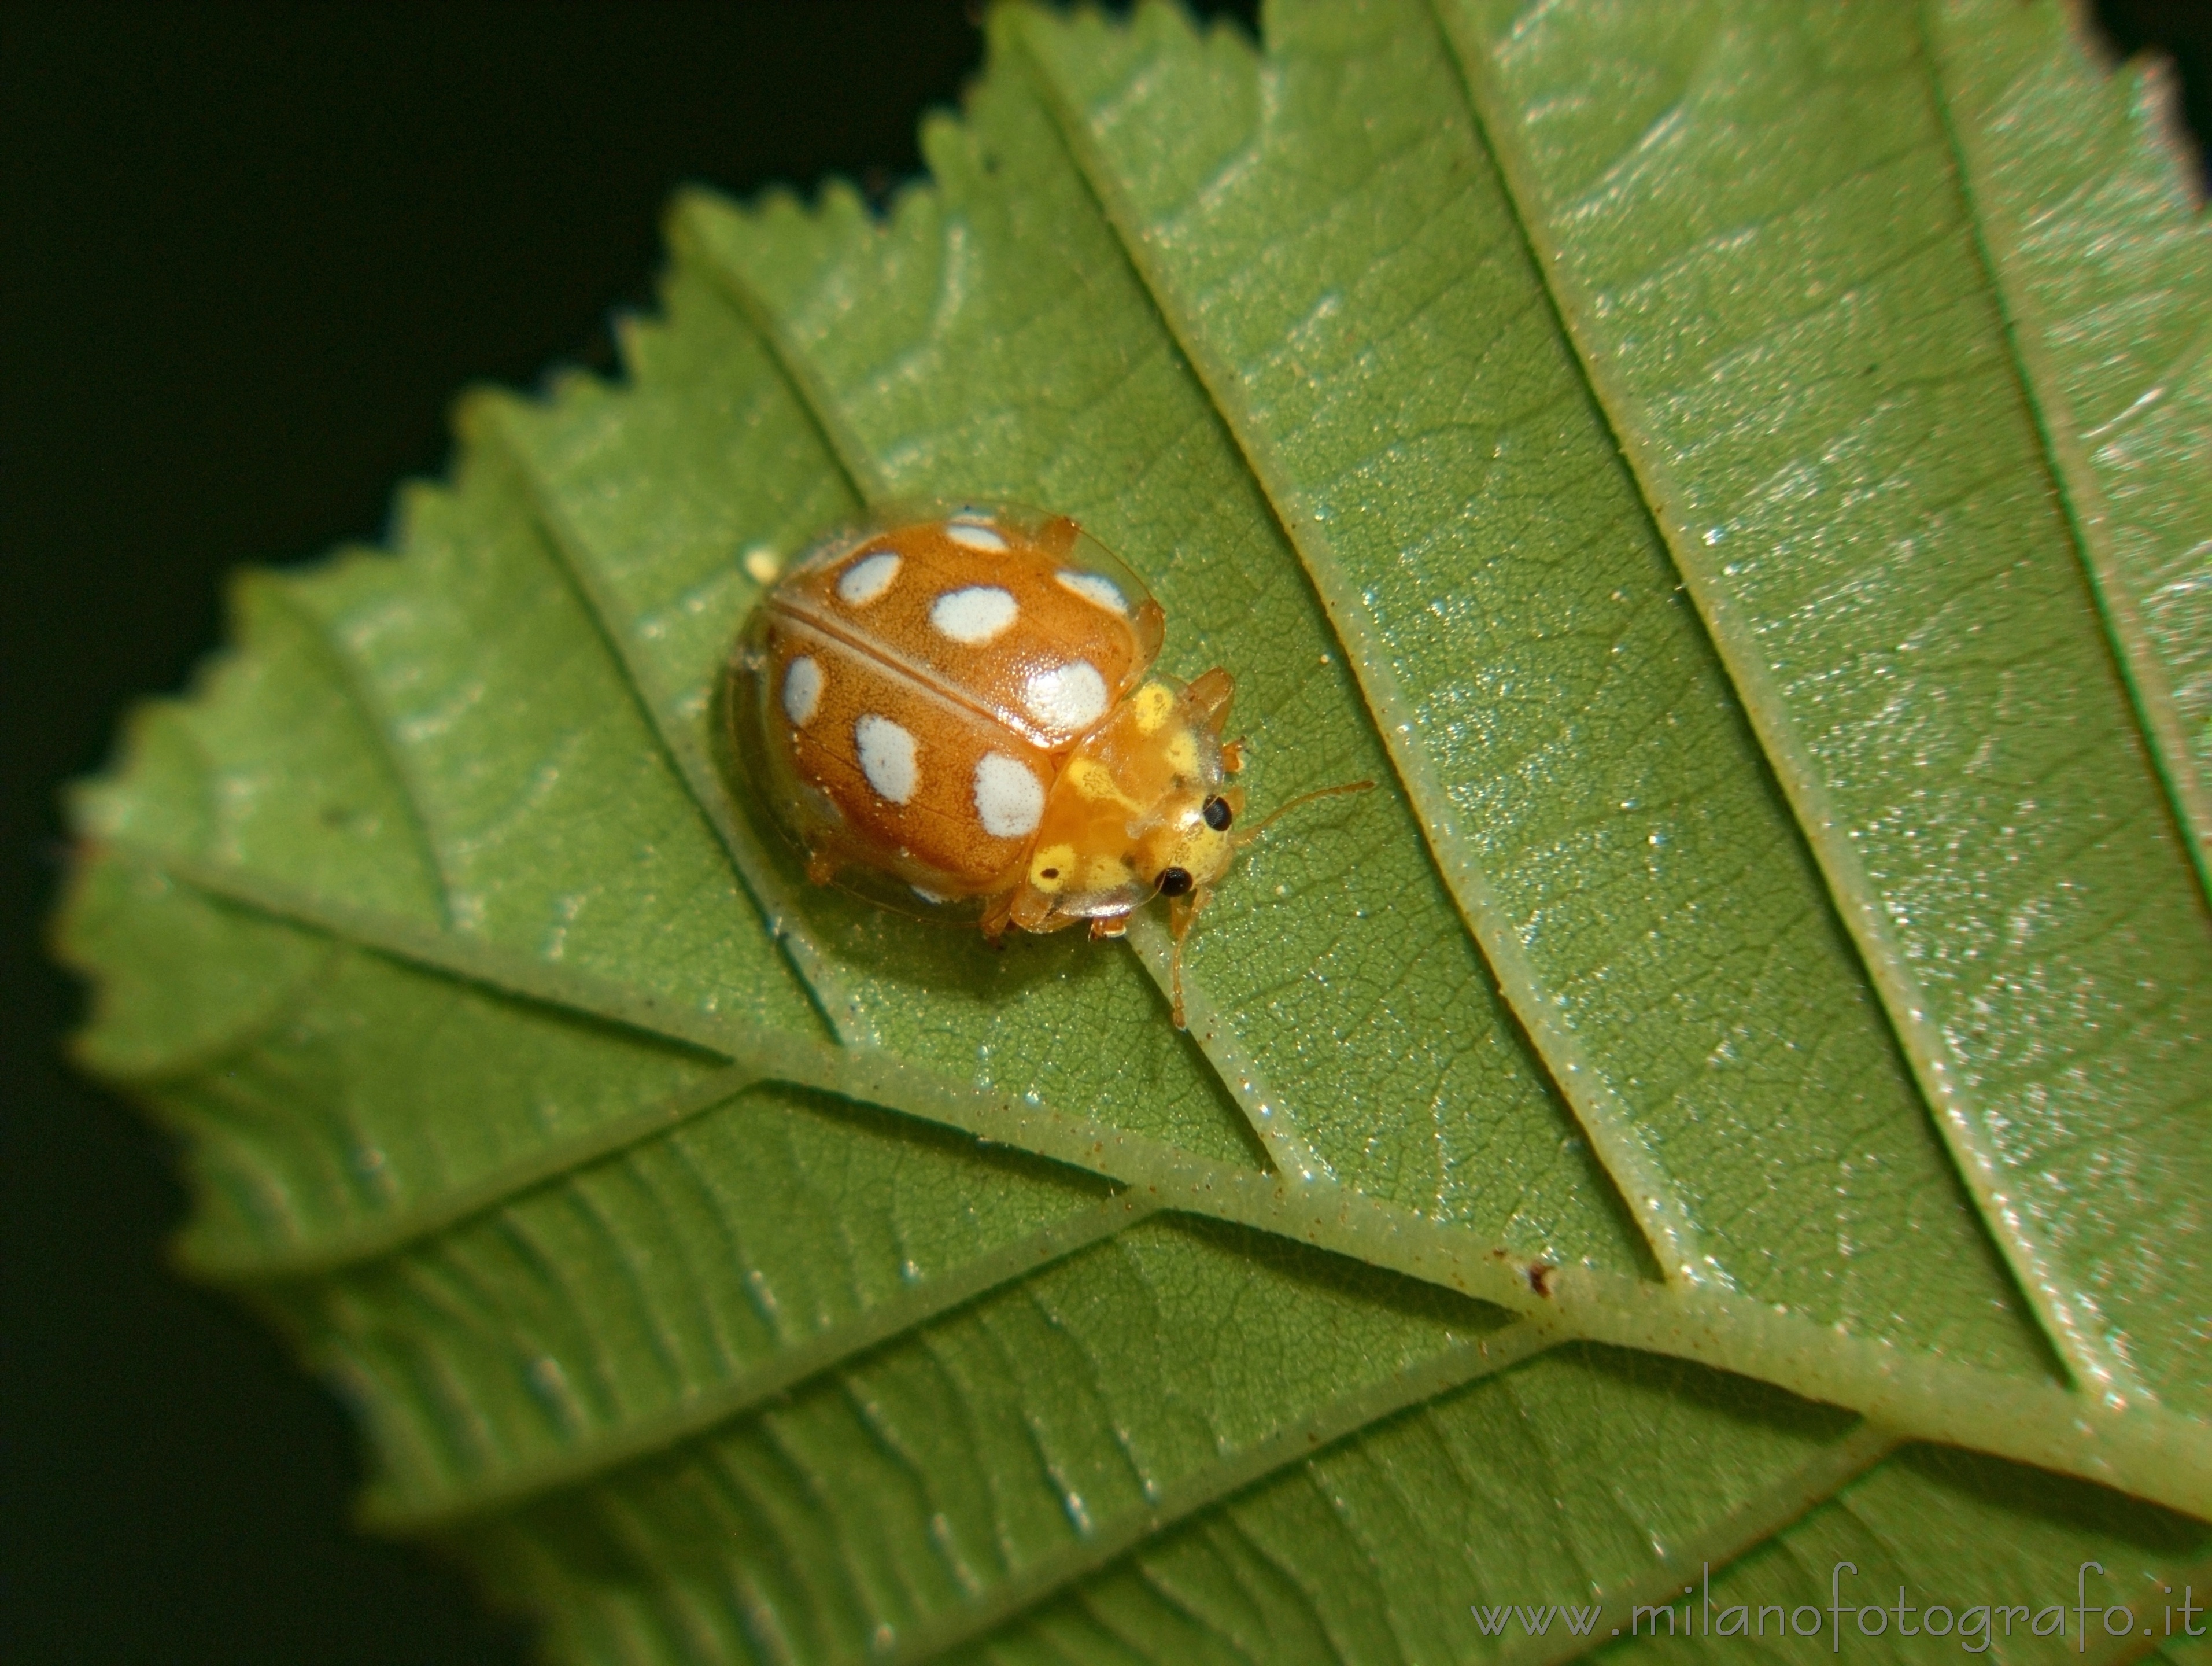 Cadrezzate (Varese, Italy): Coccinellide beetle Halyzia sedecimguttata - Cadrezzate (Varese, Italy)